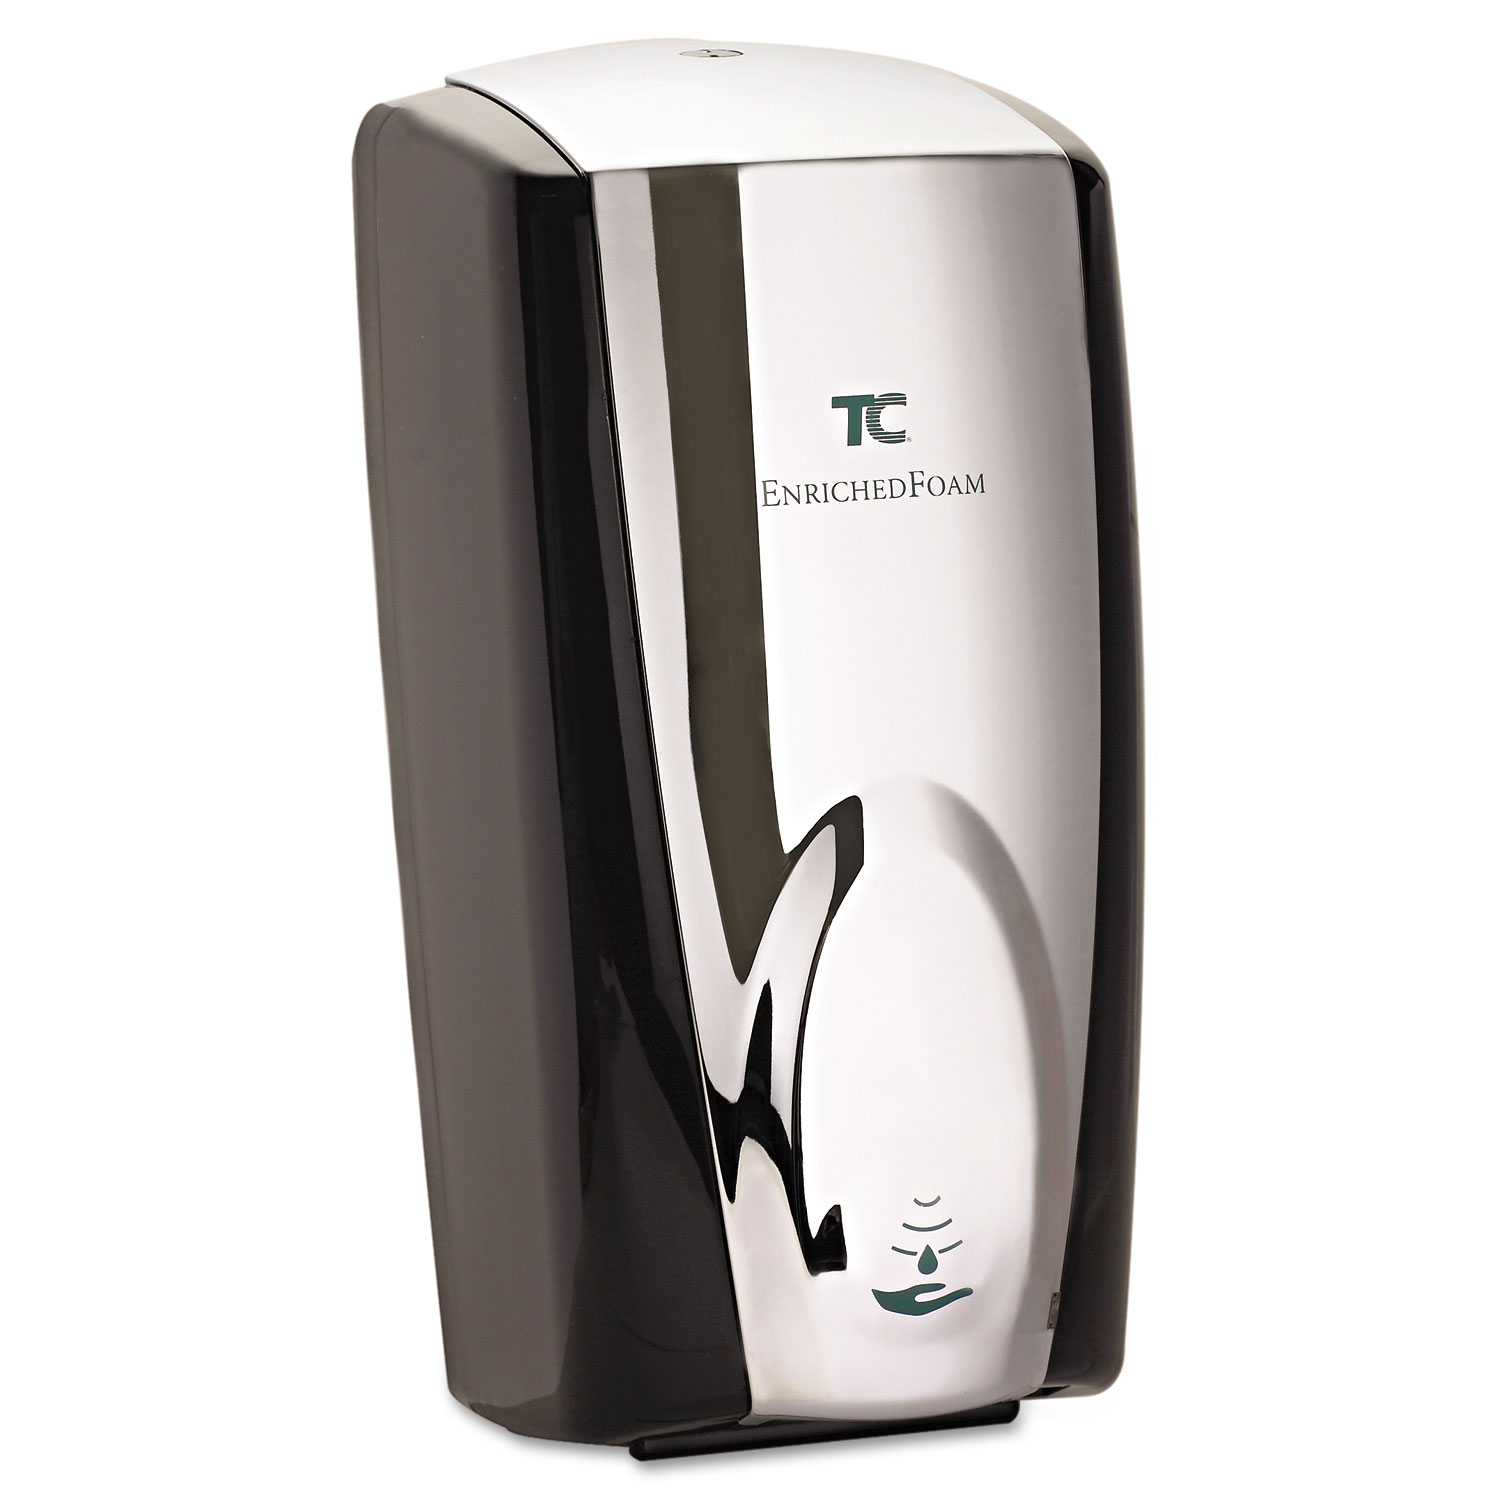  Rubbermaid Commercial FG750411 AutoFoam Touch-Free Dispenser, 1100 mL, 5.2 x 5.25 x 10.9, Black/Chrome (RCP750411) 